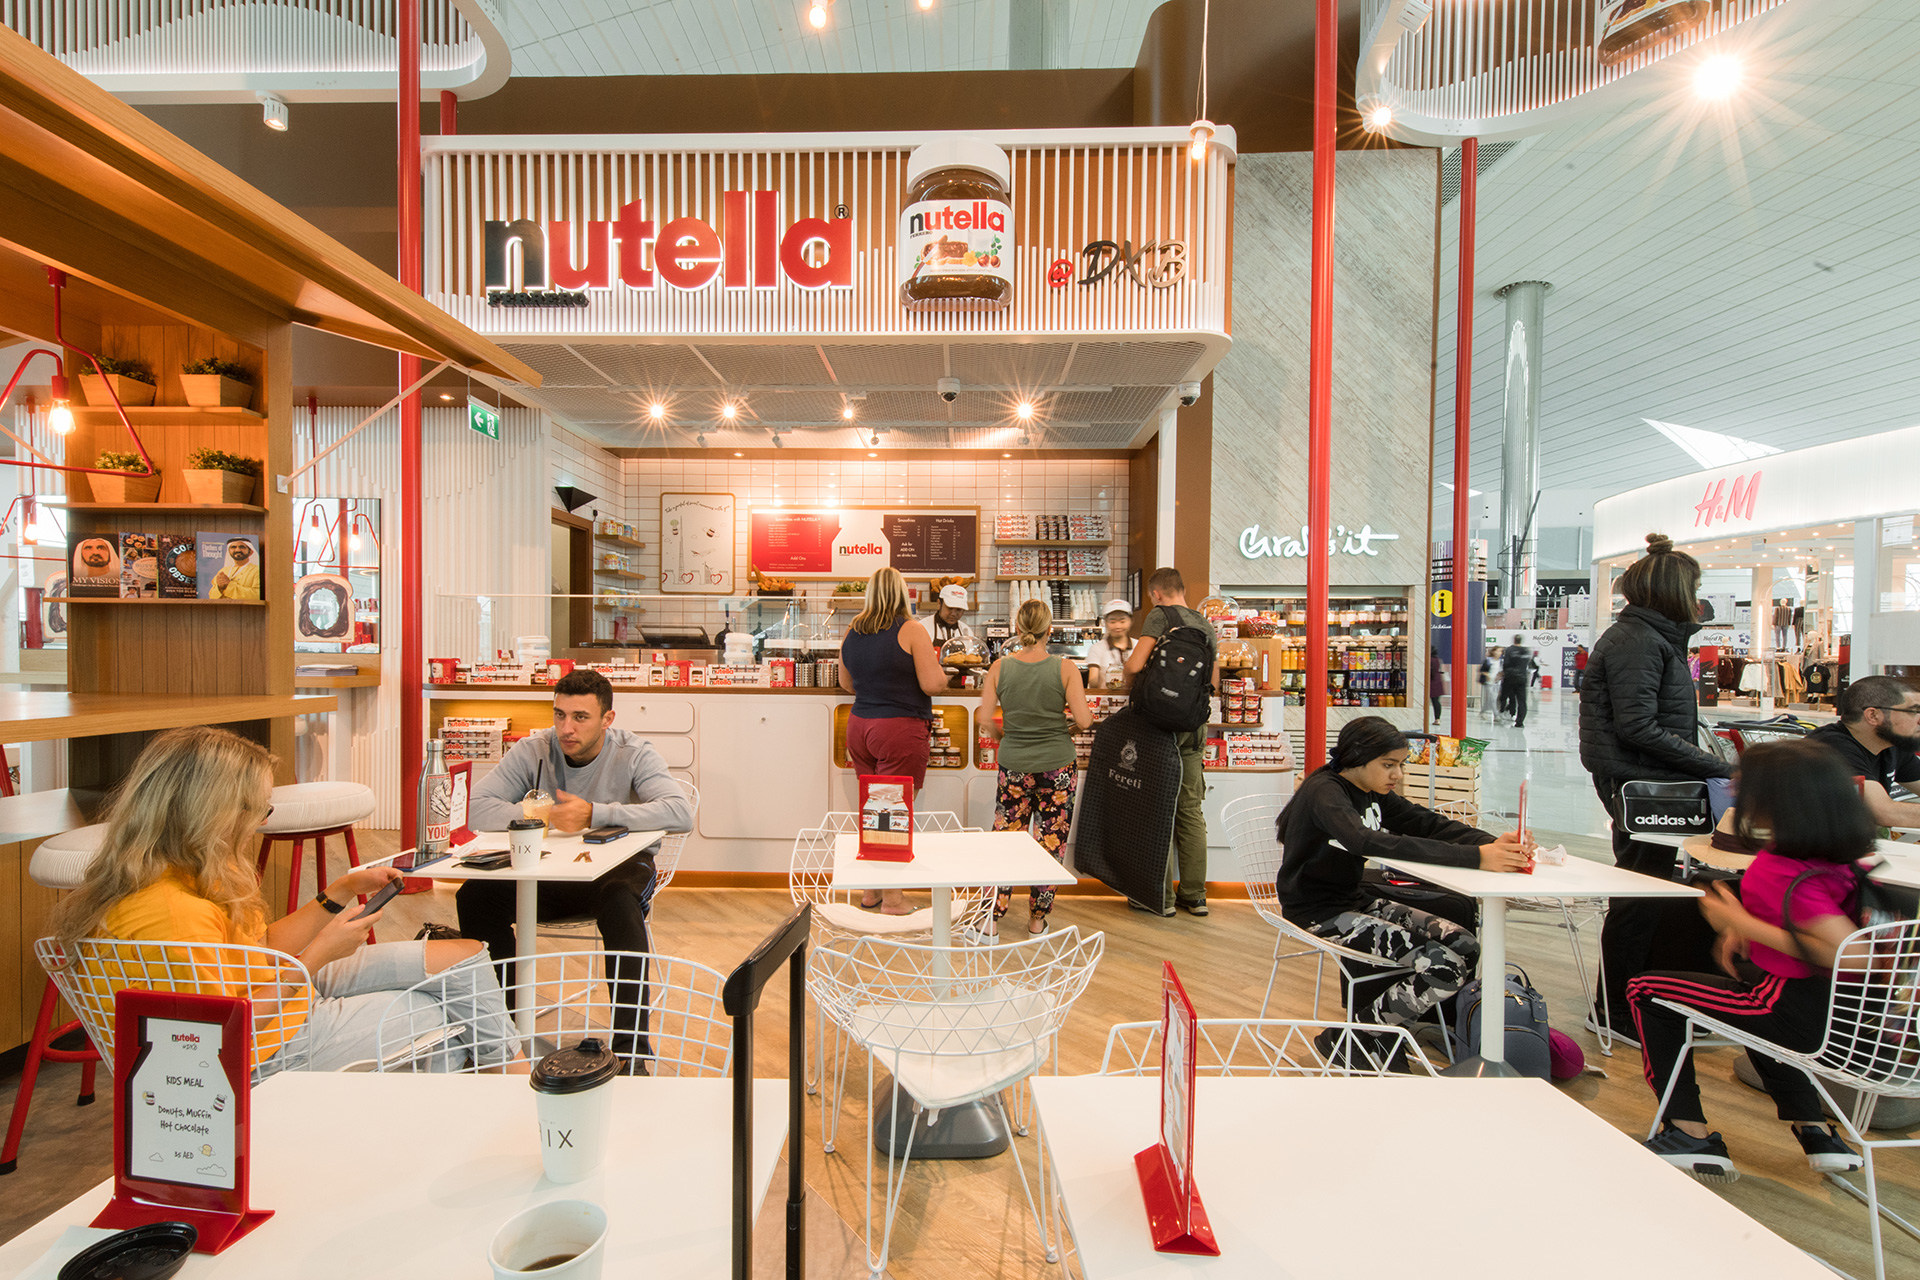 Nutella airport café design